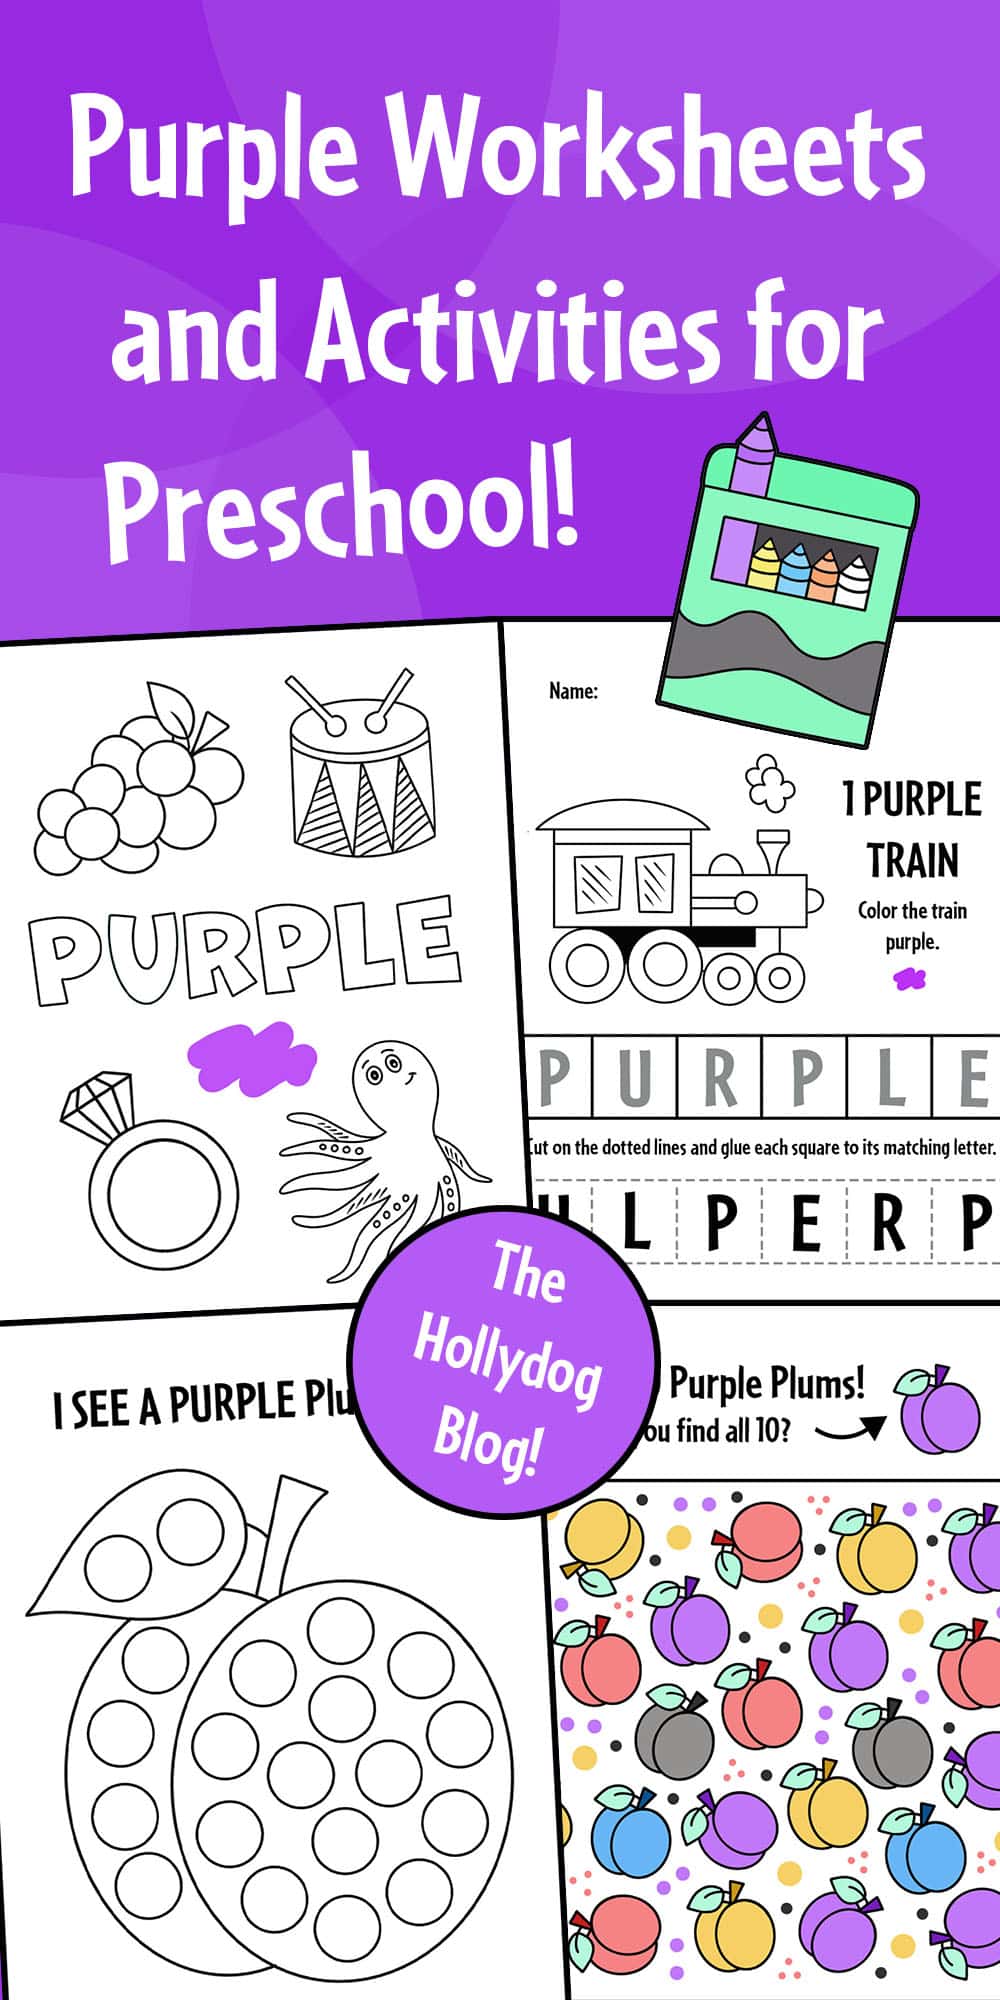 Purple Color Activities and Worksheets for Preschool!